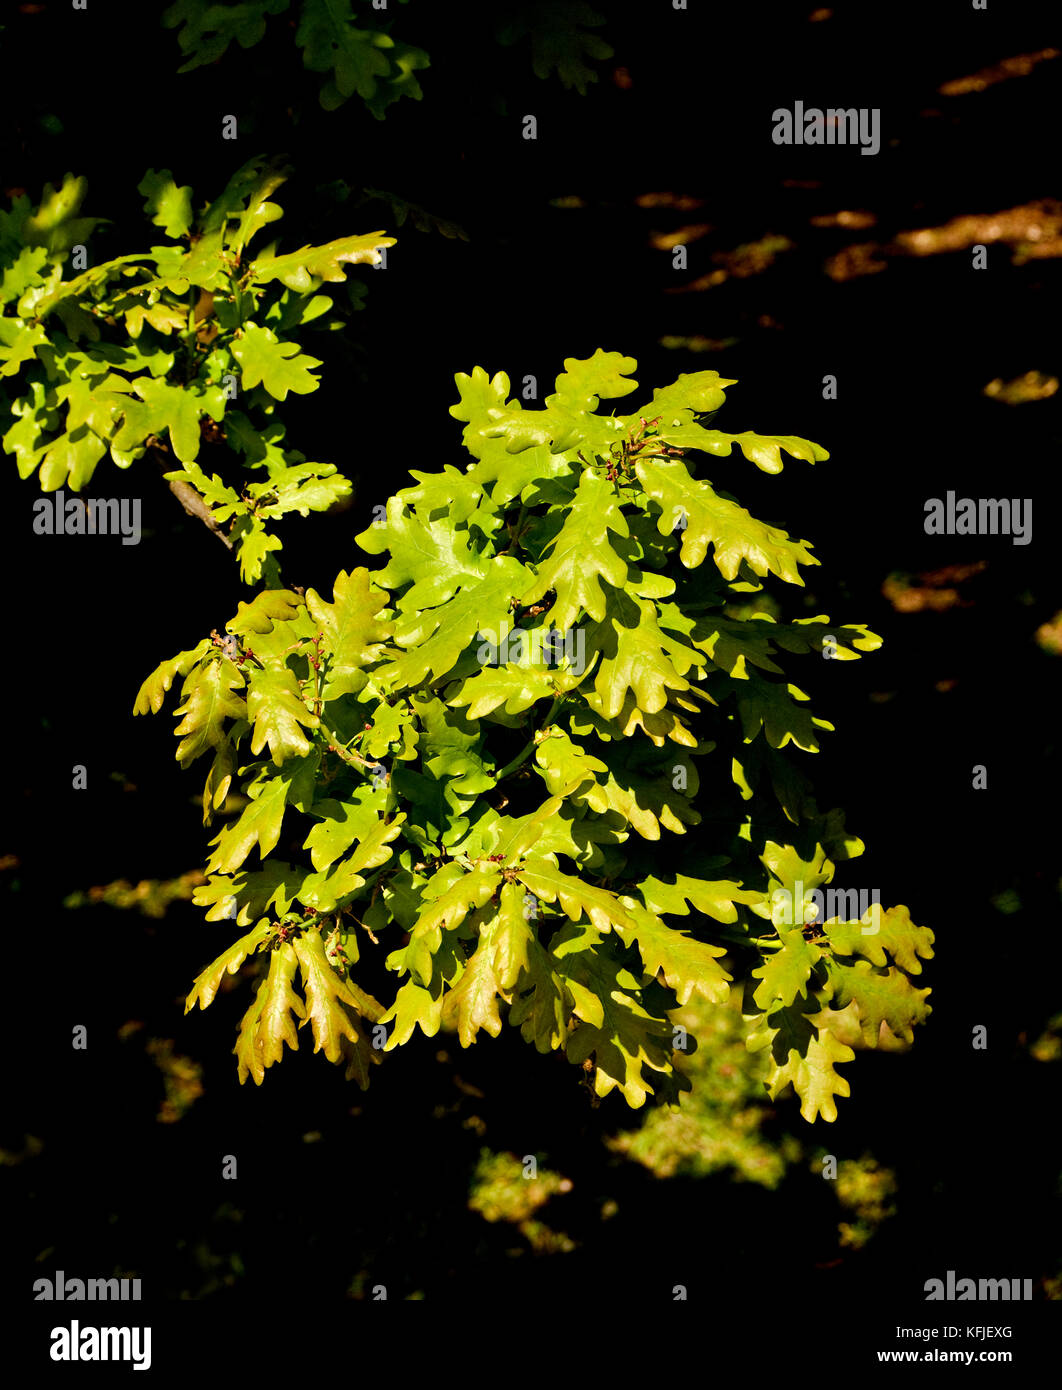 England; Oak tree leaves (Quercus robur) Stock Photo